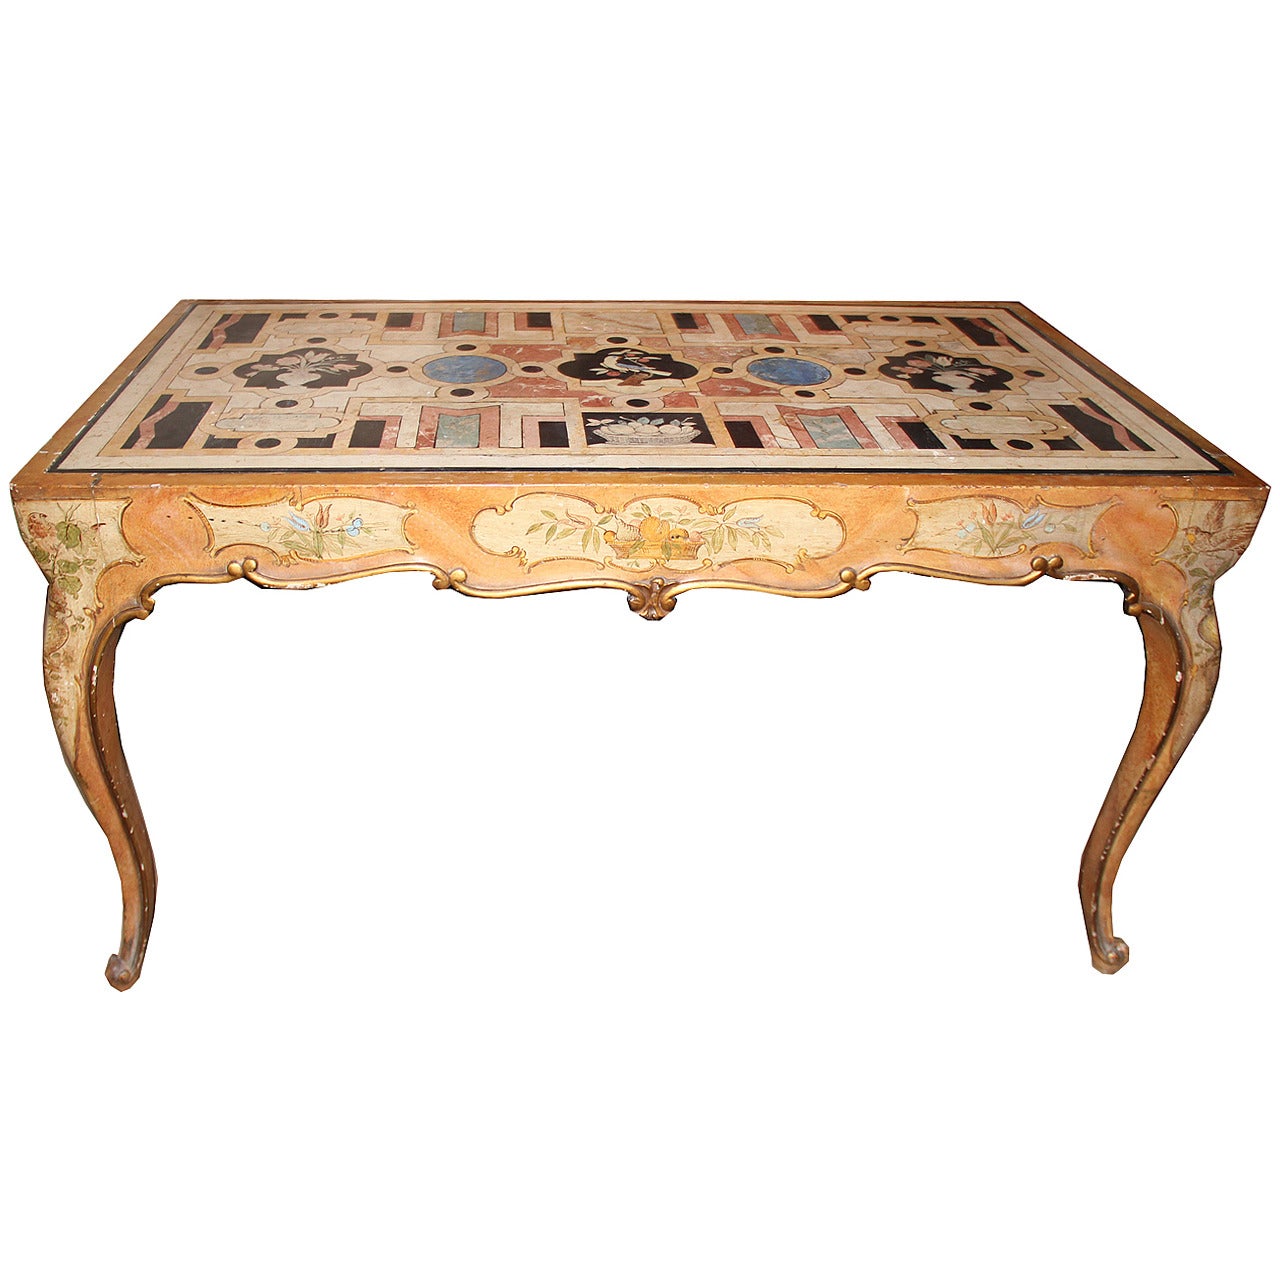 Unusual 18th Century Italian Scagliola, Parcel Gilt and Polychrome Table